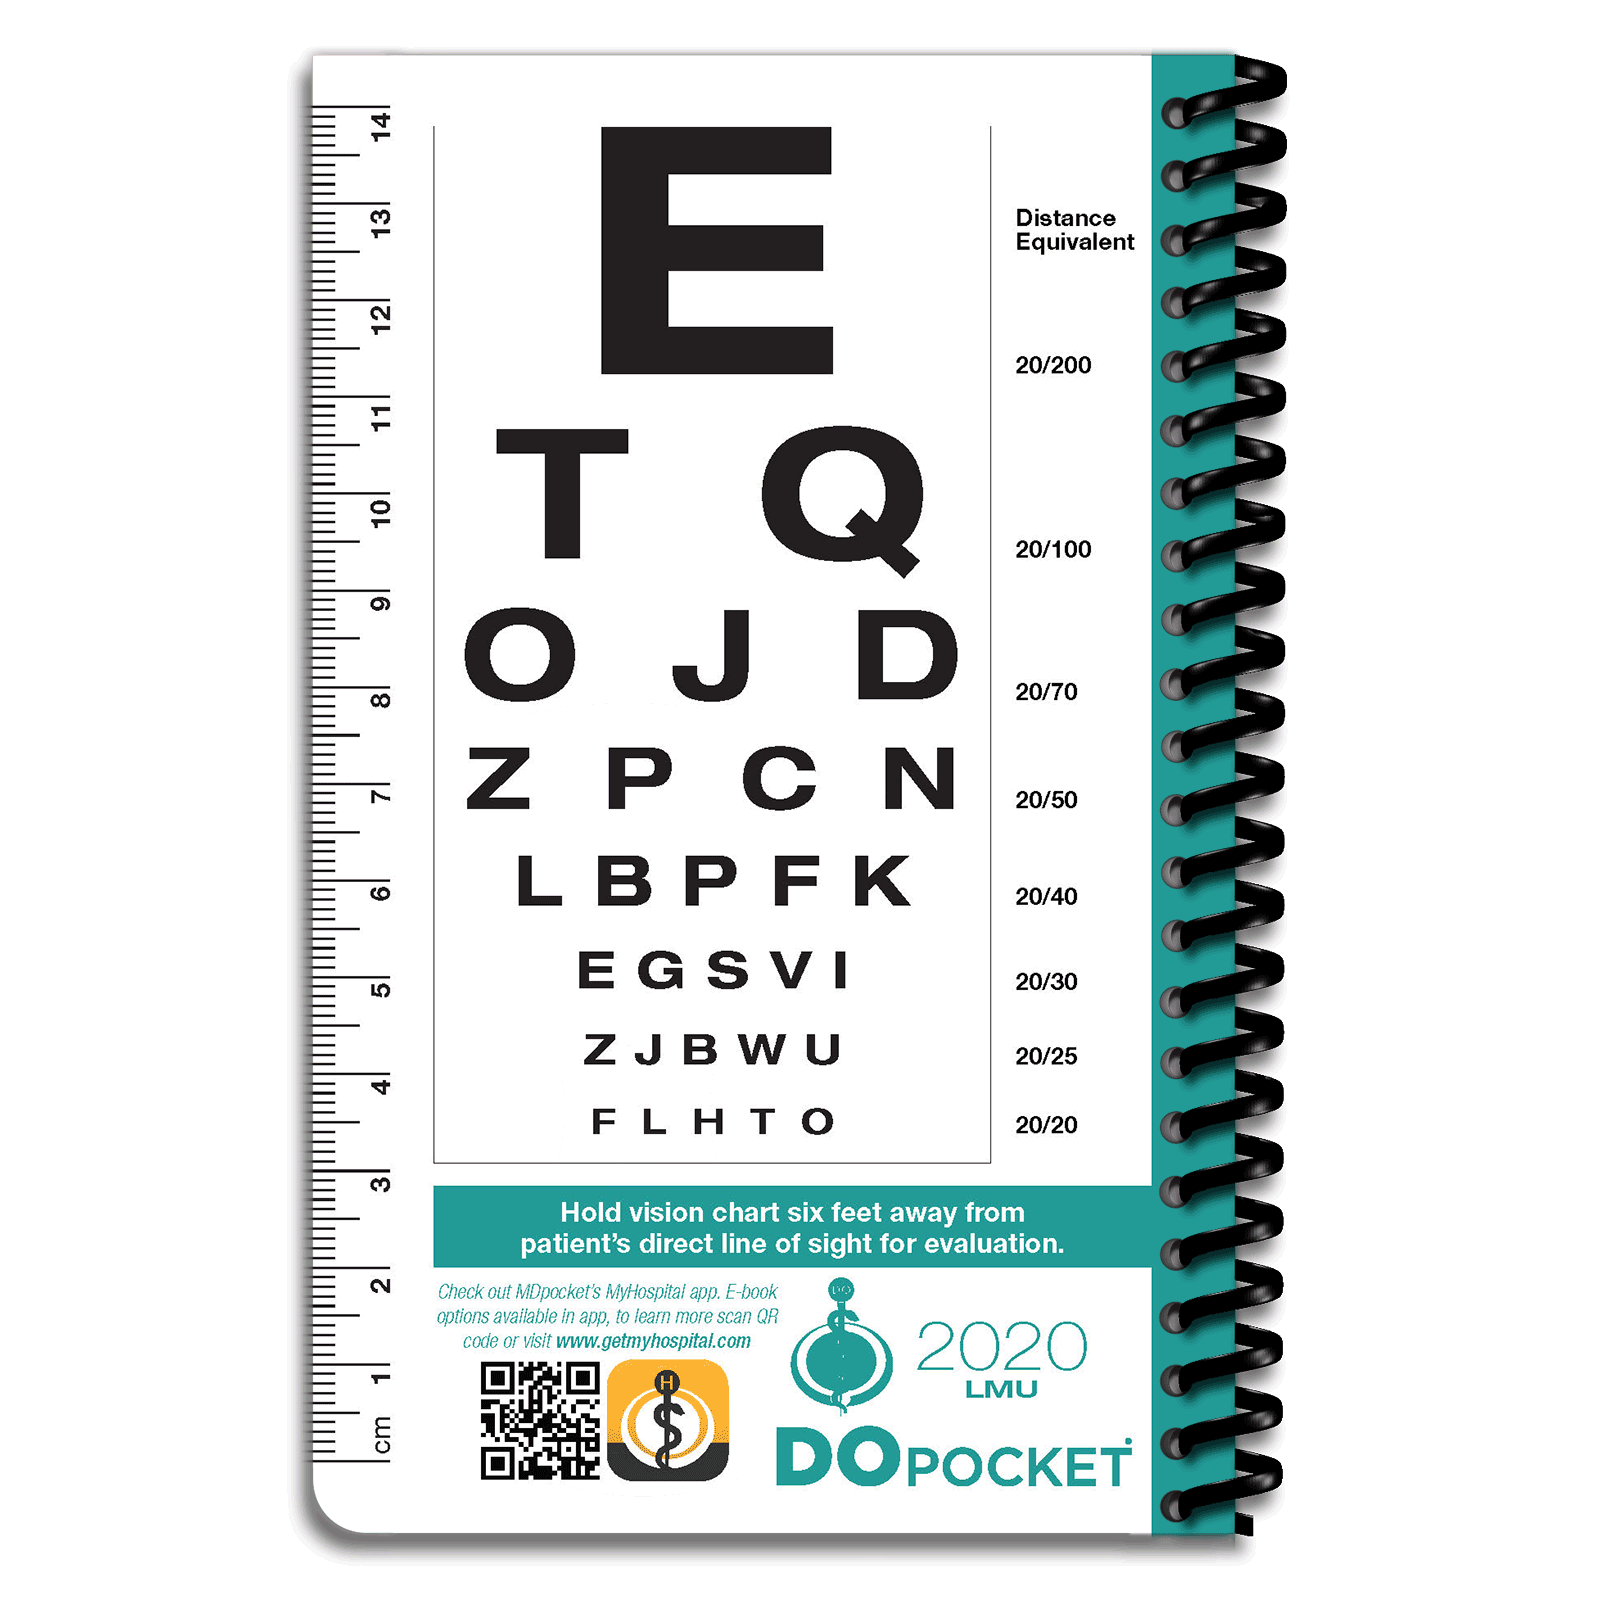 DOpocket Lincoln Memorial University - 2019 Edition